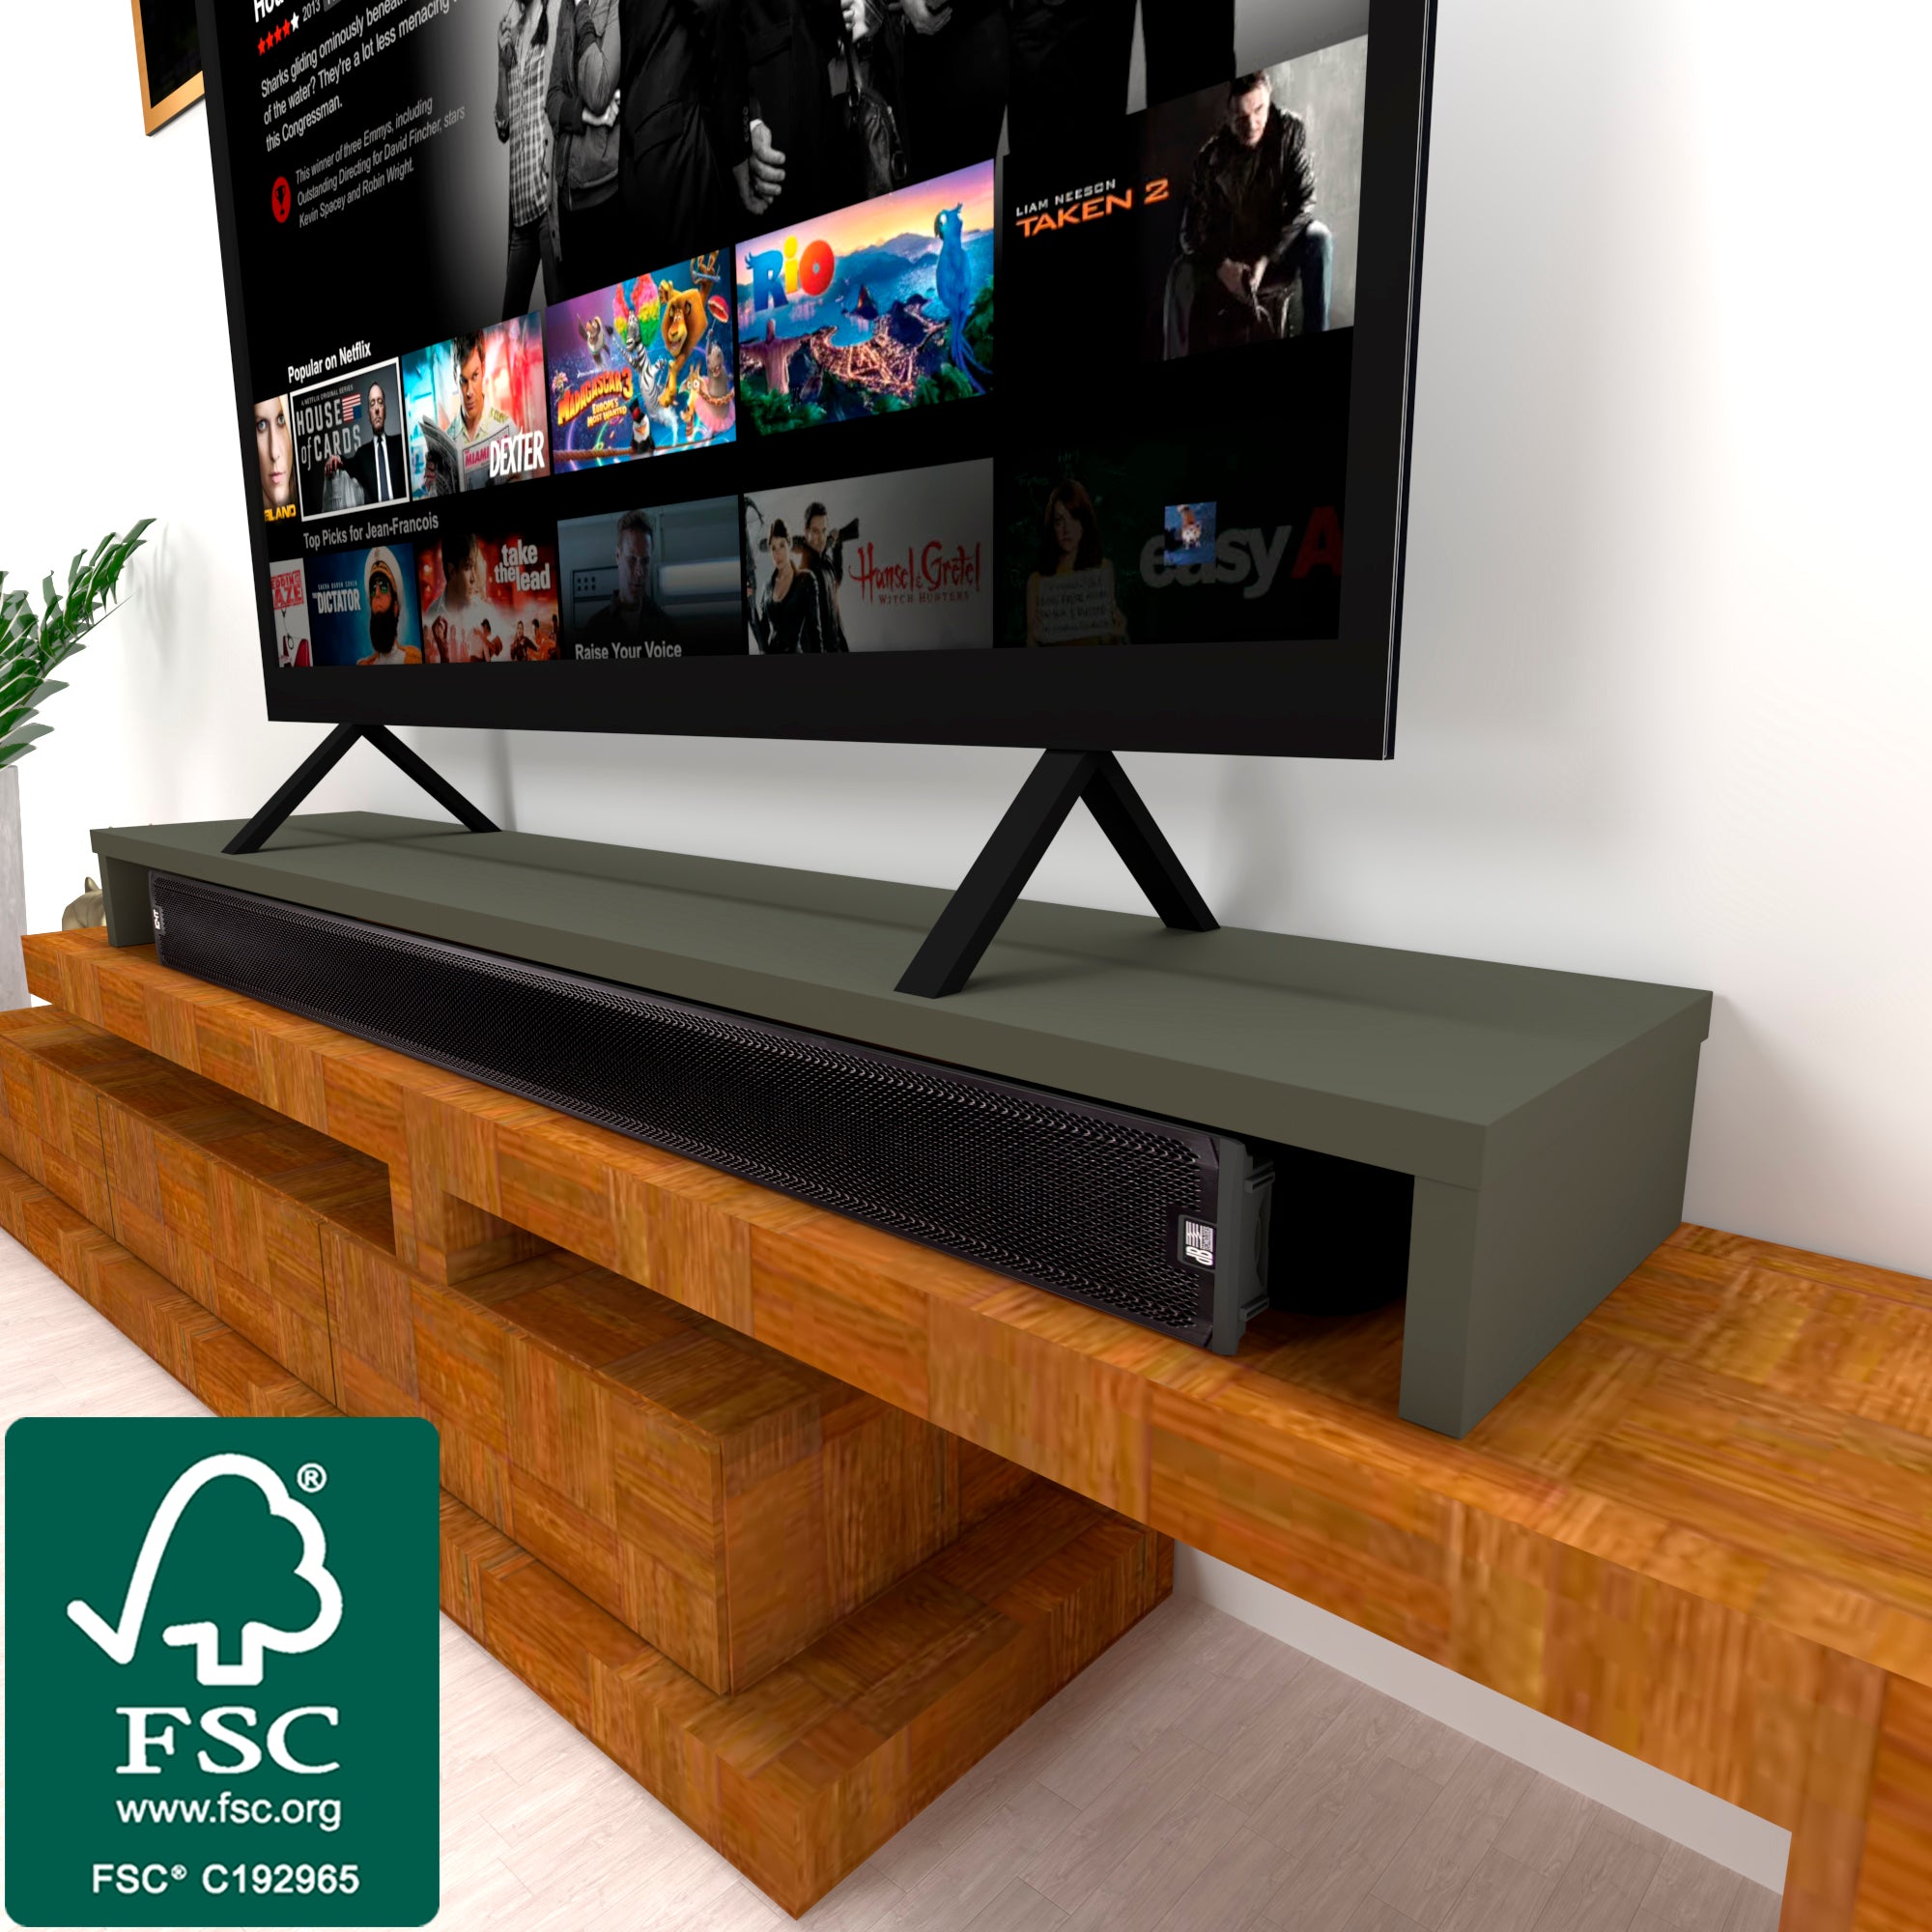 Soporte Elevador TV de Madera FSC®. HENOR. 110x35x15 cm Soporta 60 Kg.  Roble stel